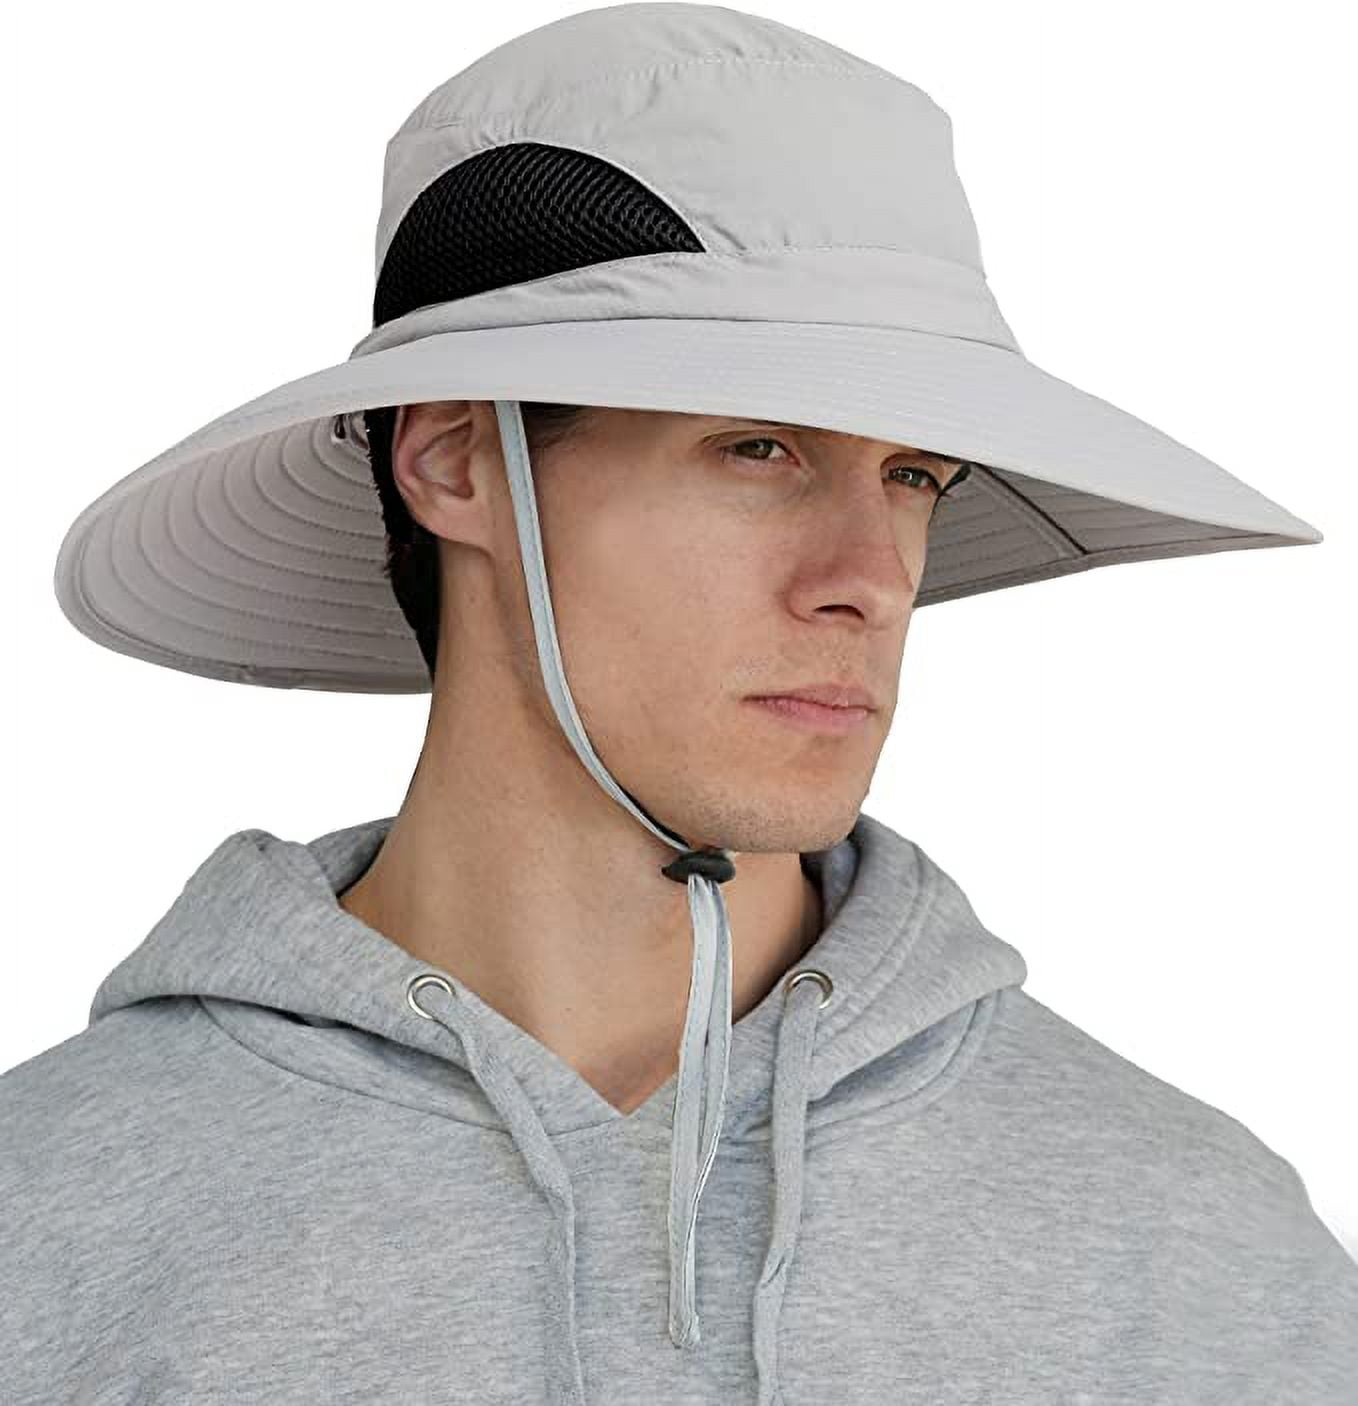 GearTOP Fishing Hat Outdoor Sun Protection Hats for Men & Women